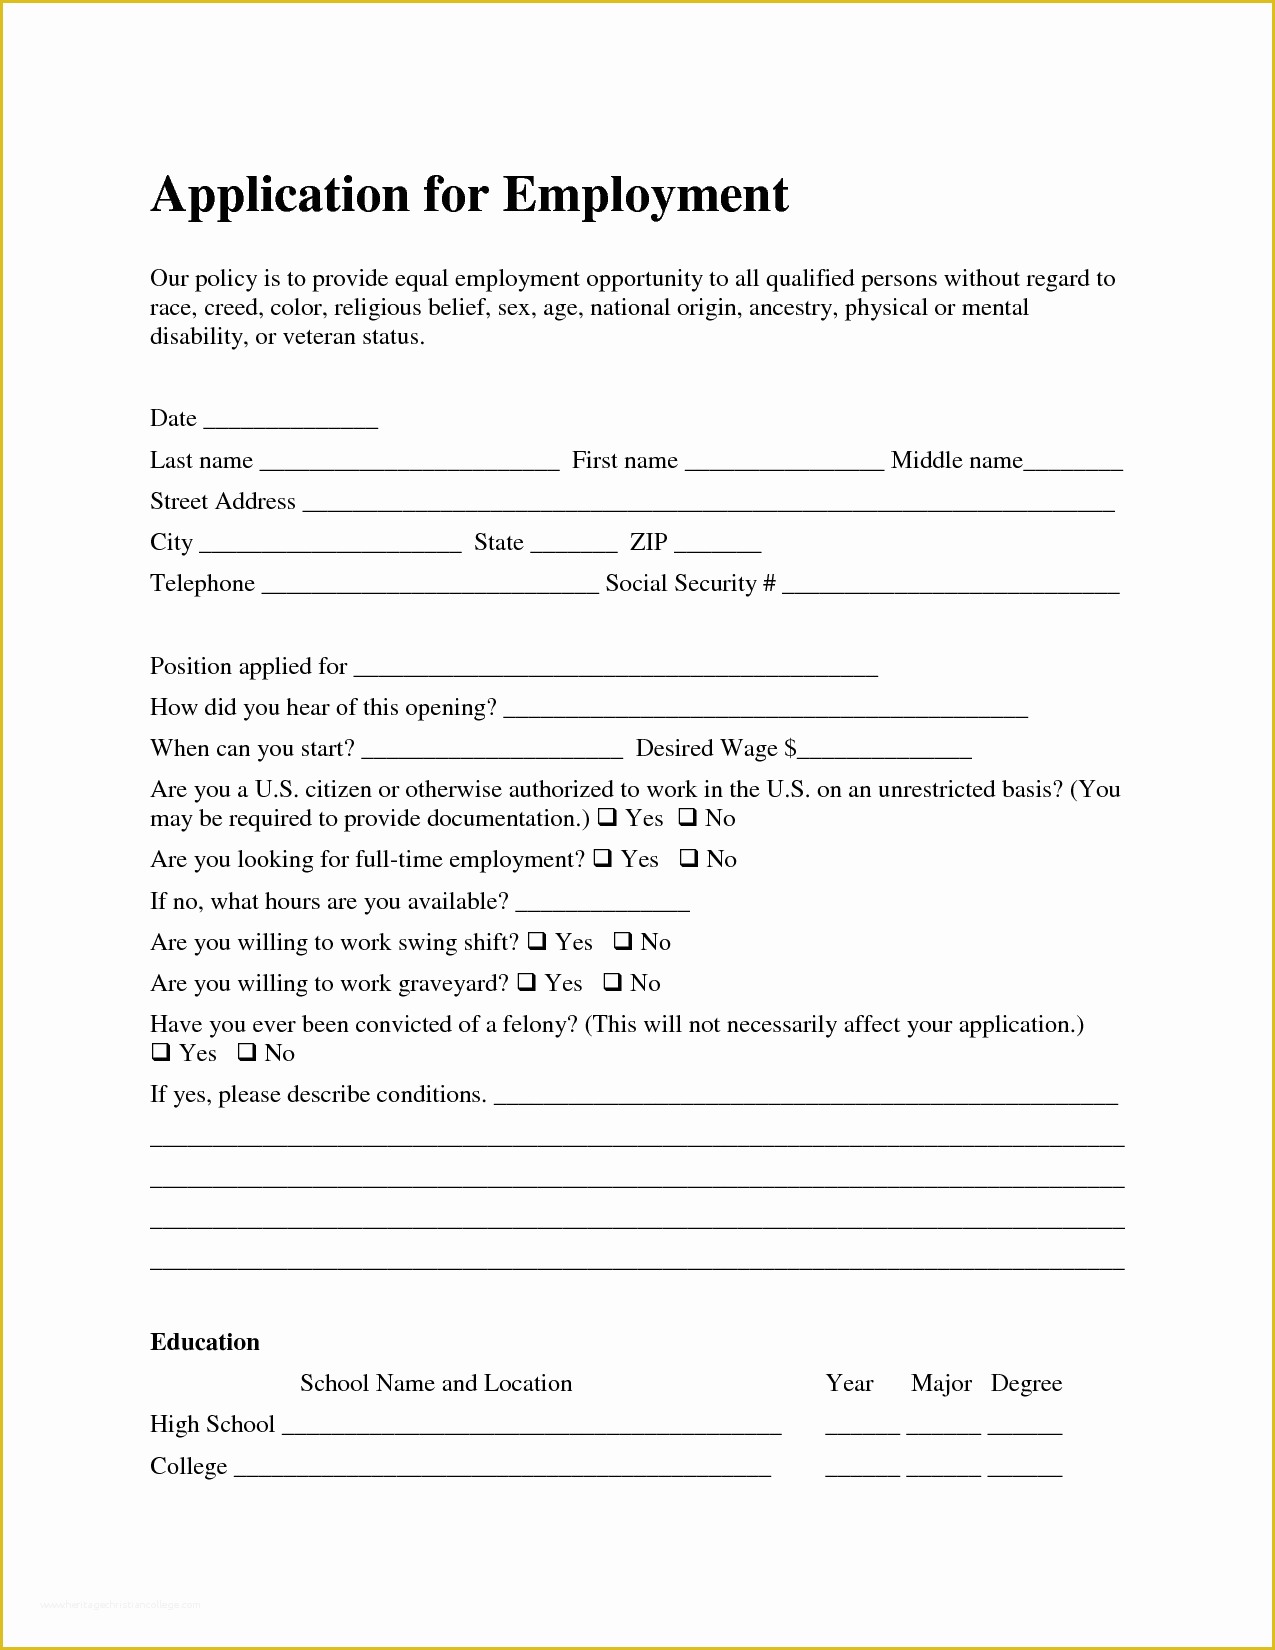 Free Online Application Template Of Template Job Application Azhrzltq